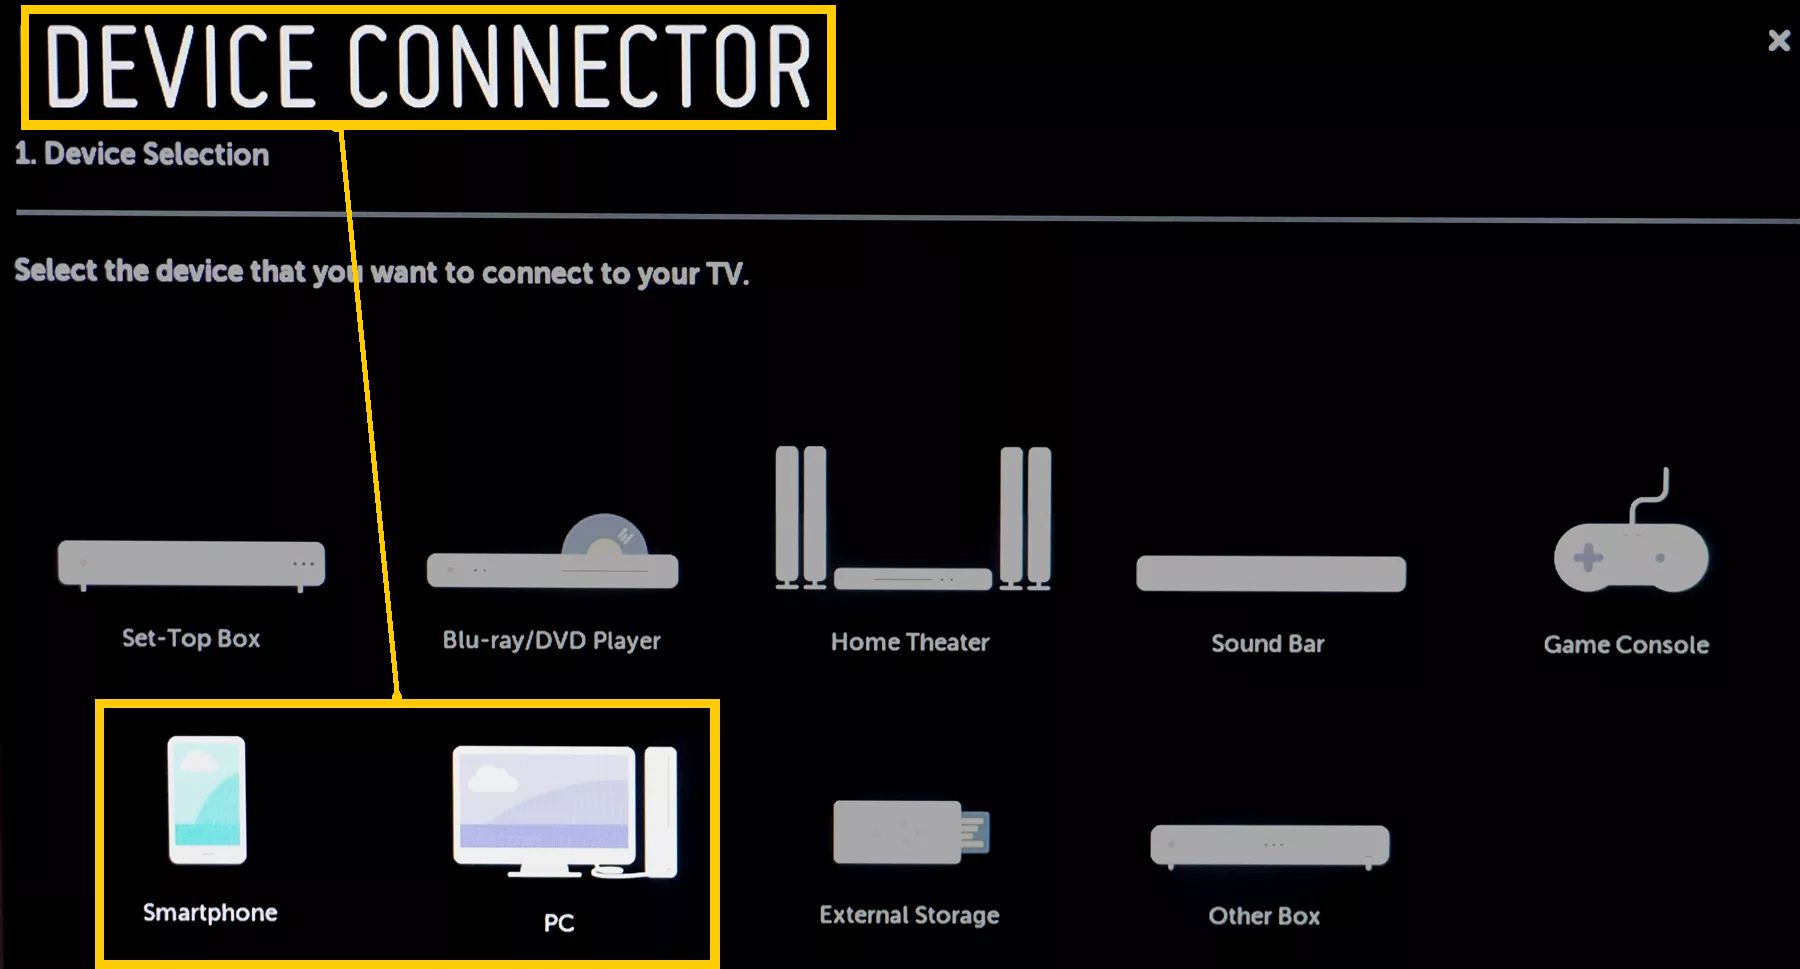 LG TV Device Connector Menu - Smartphone och PC markerad